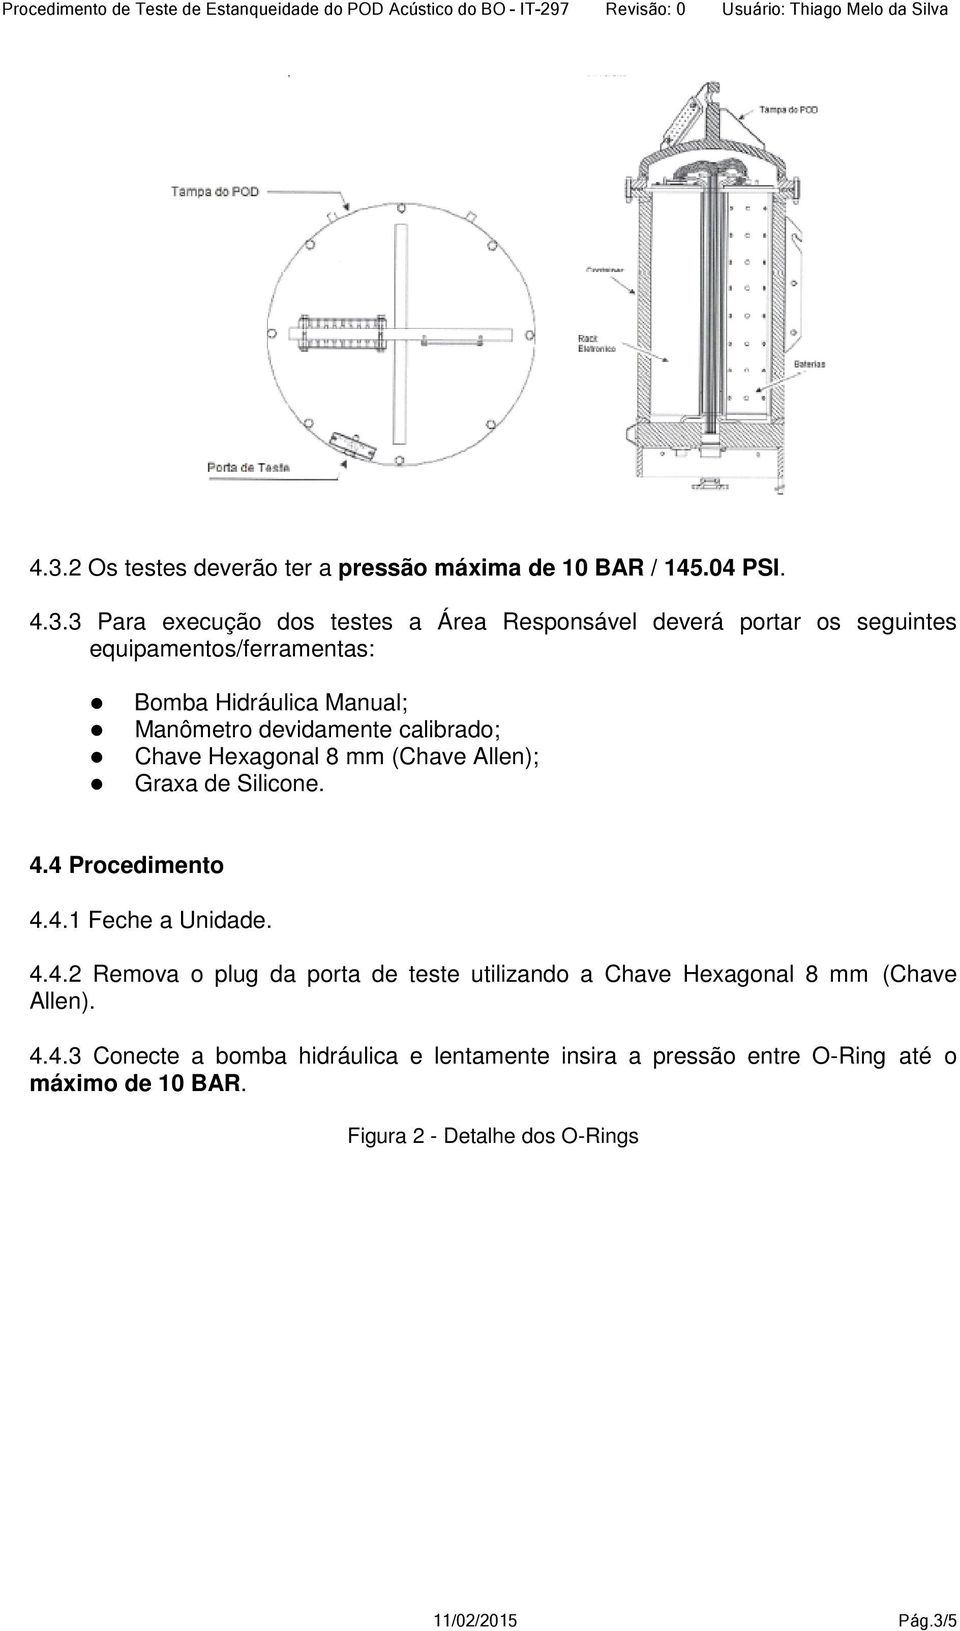 Silicone. 4.4 Procedimento 4.4.1 Feche a Unidade. 4.4.2 Remova o plug da porta de teste utilizando a Chave Hexagonal 8 mm (Chave Allen). 4.4.3 Conecte a bomba hidráulica e lentamente insira a pressão entre O-Ring até o máximo de 10 BAR.